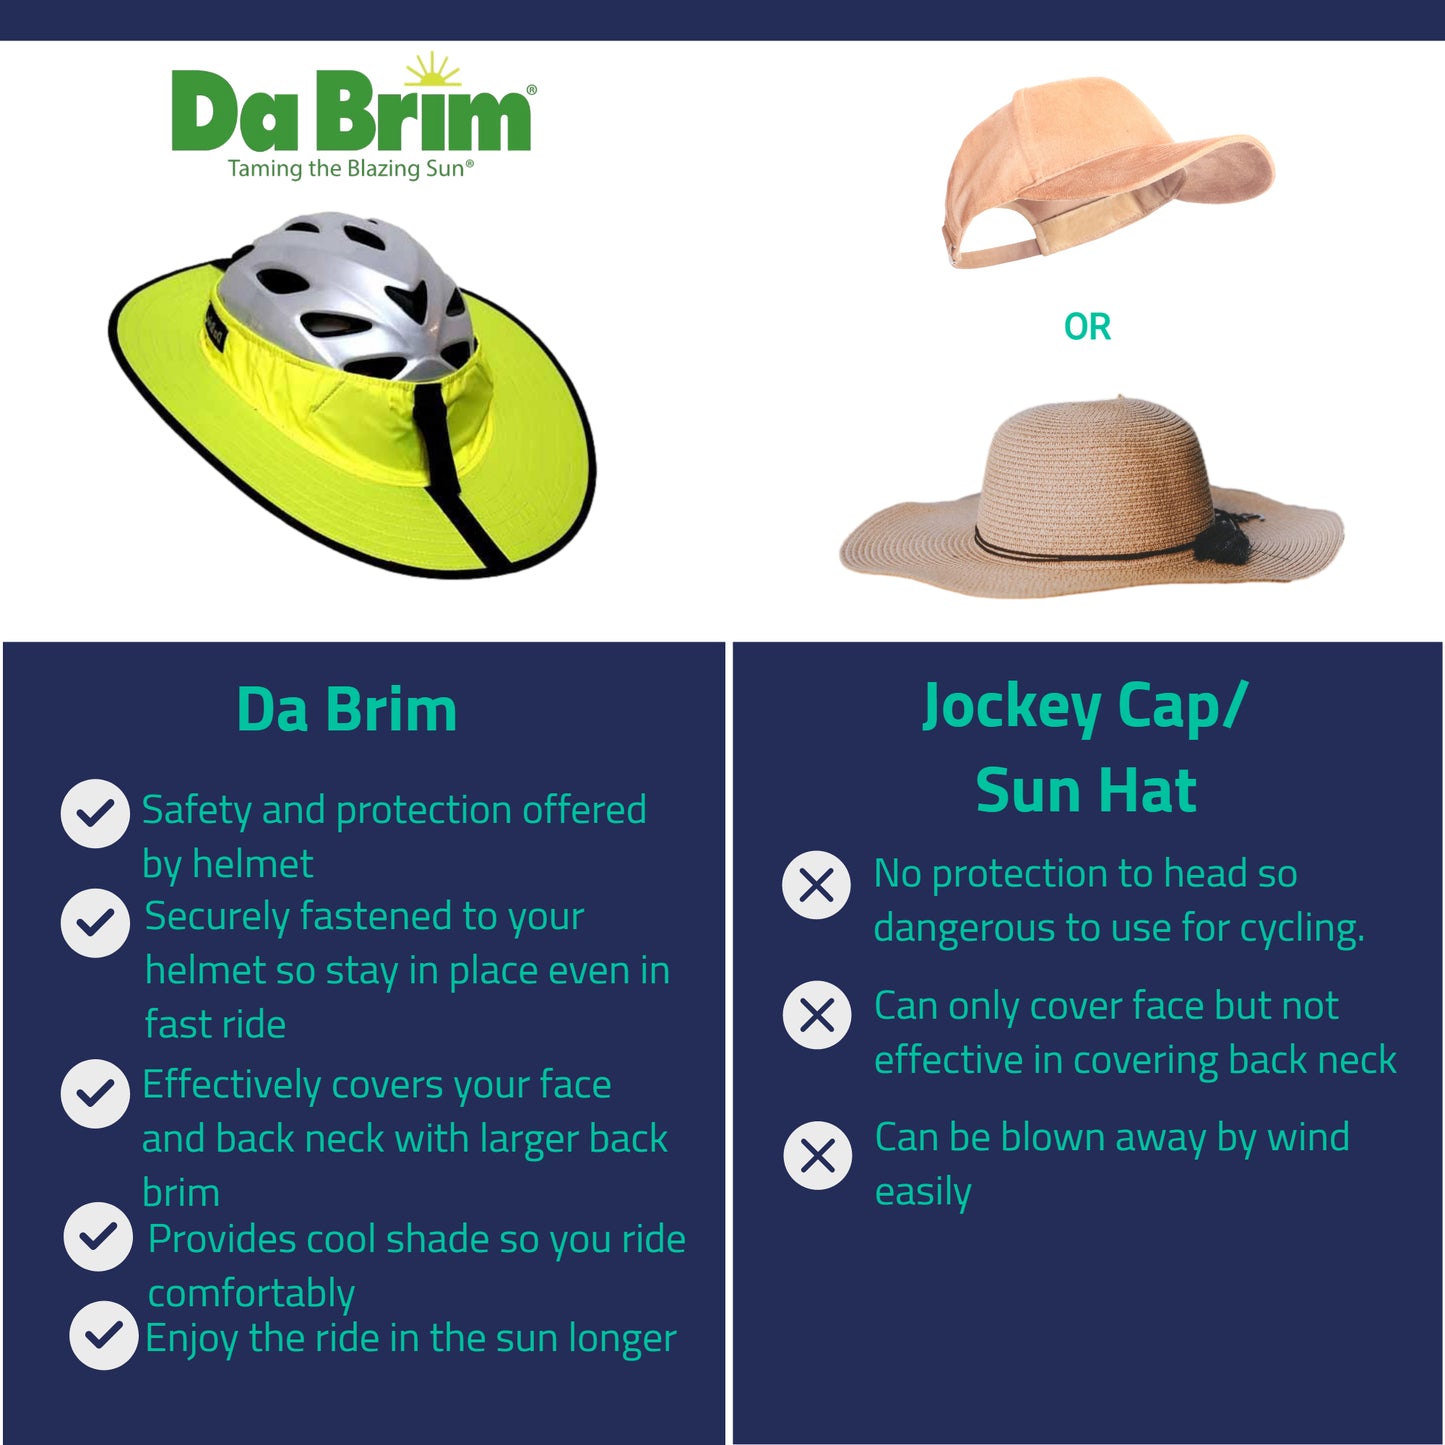 Da Brim Sporty Cycling and Jockey Cap or Sun Hat Comparison.